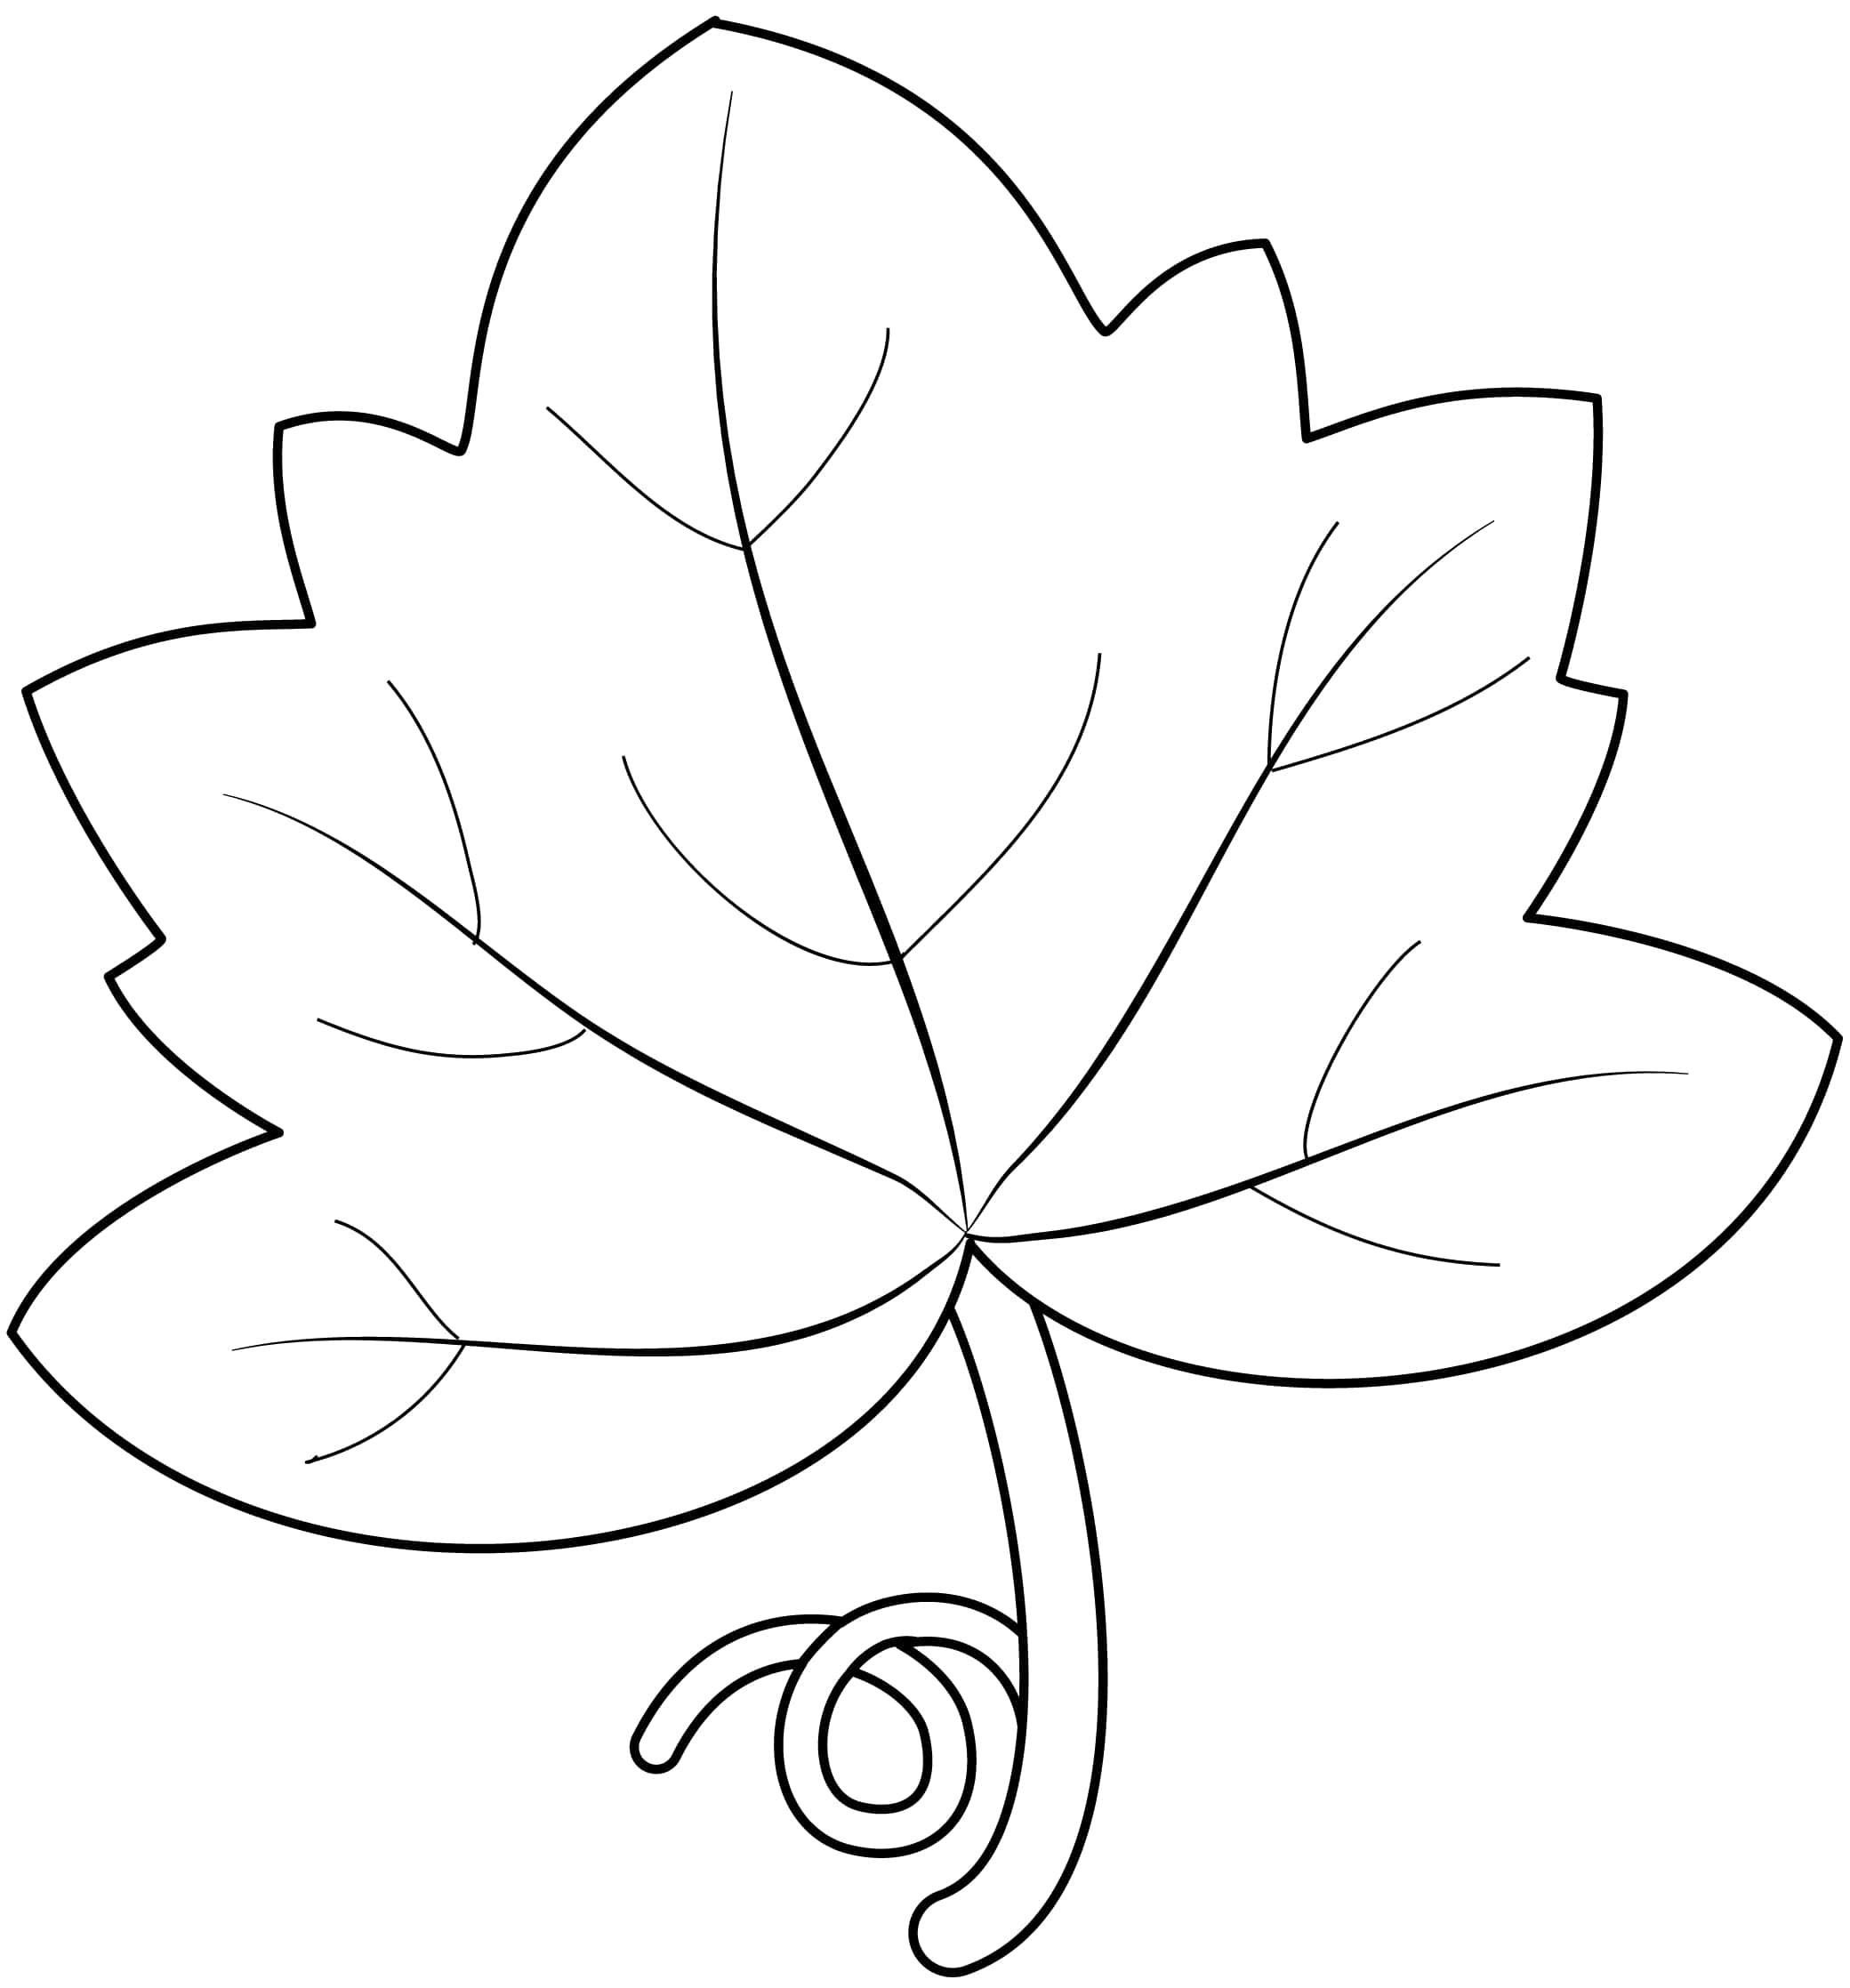 Printable Paper Leaf Patterns_89300